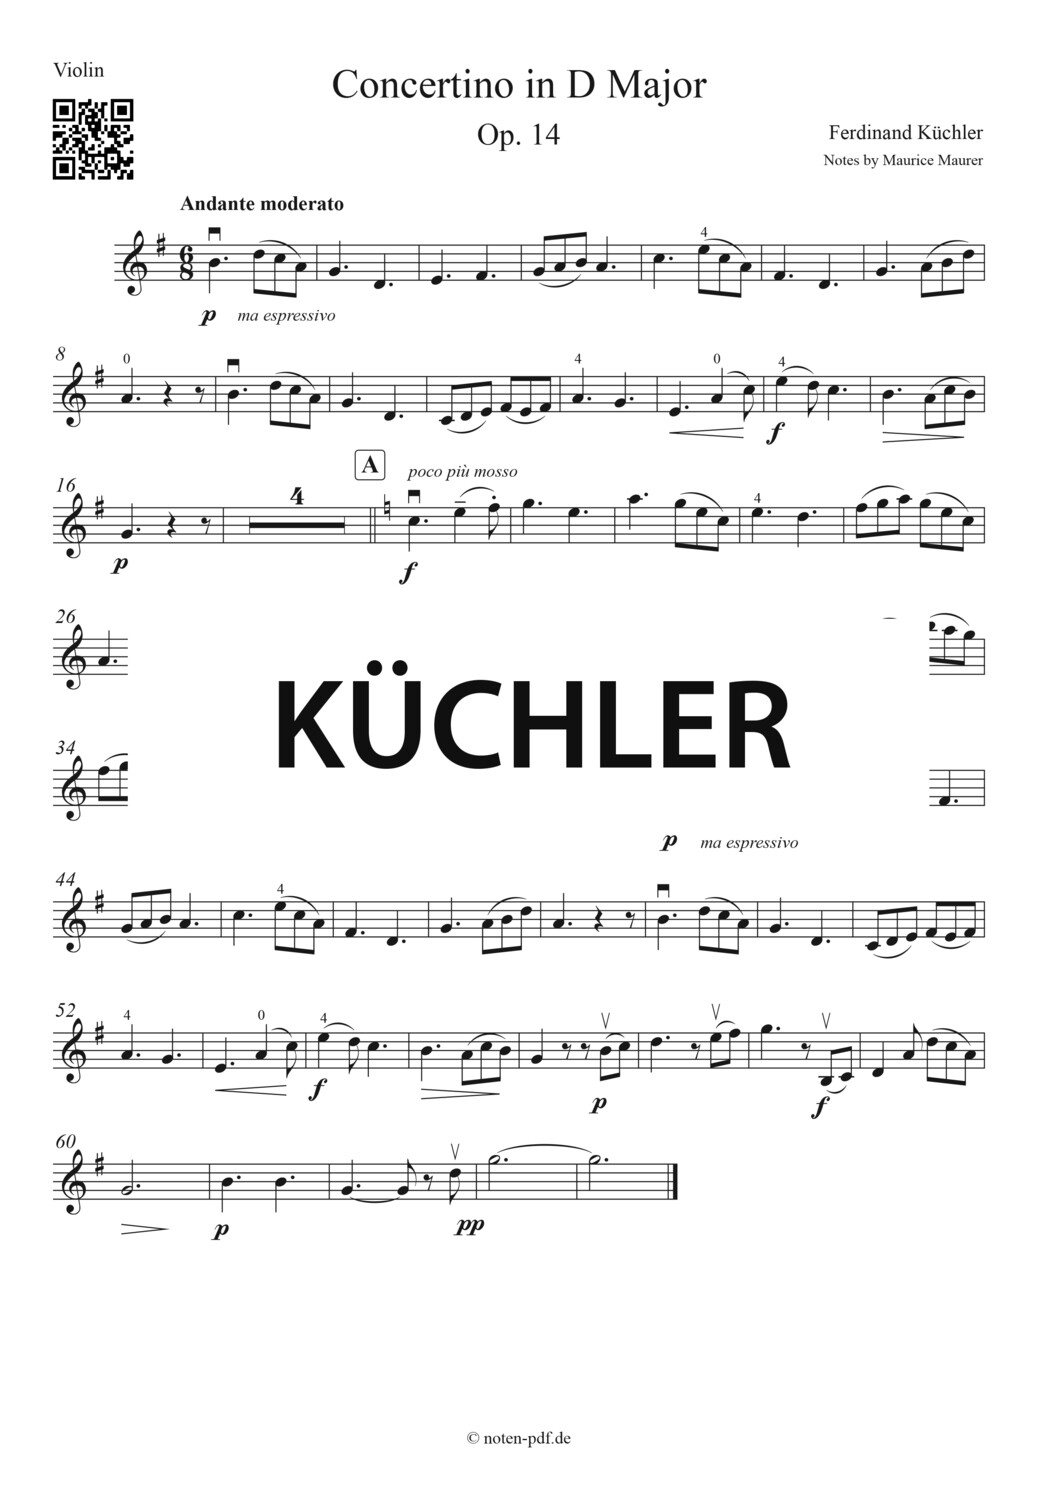 Küchler: Concertino Op. 14 - 2. Mov. (Violin Sheet Music)